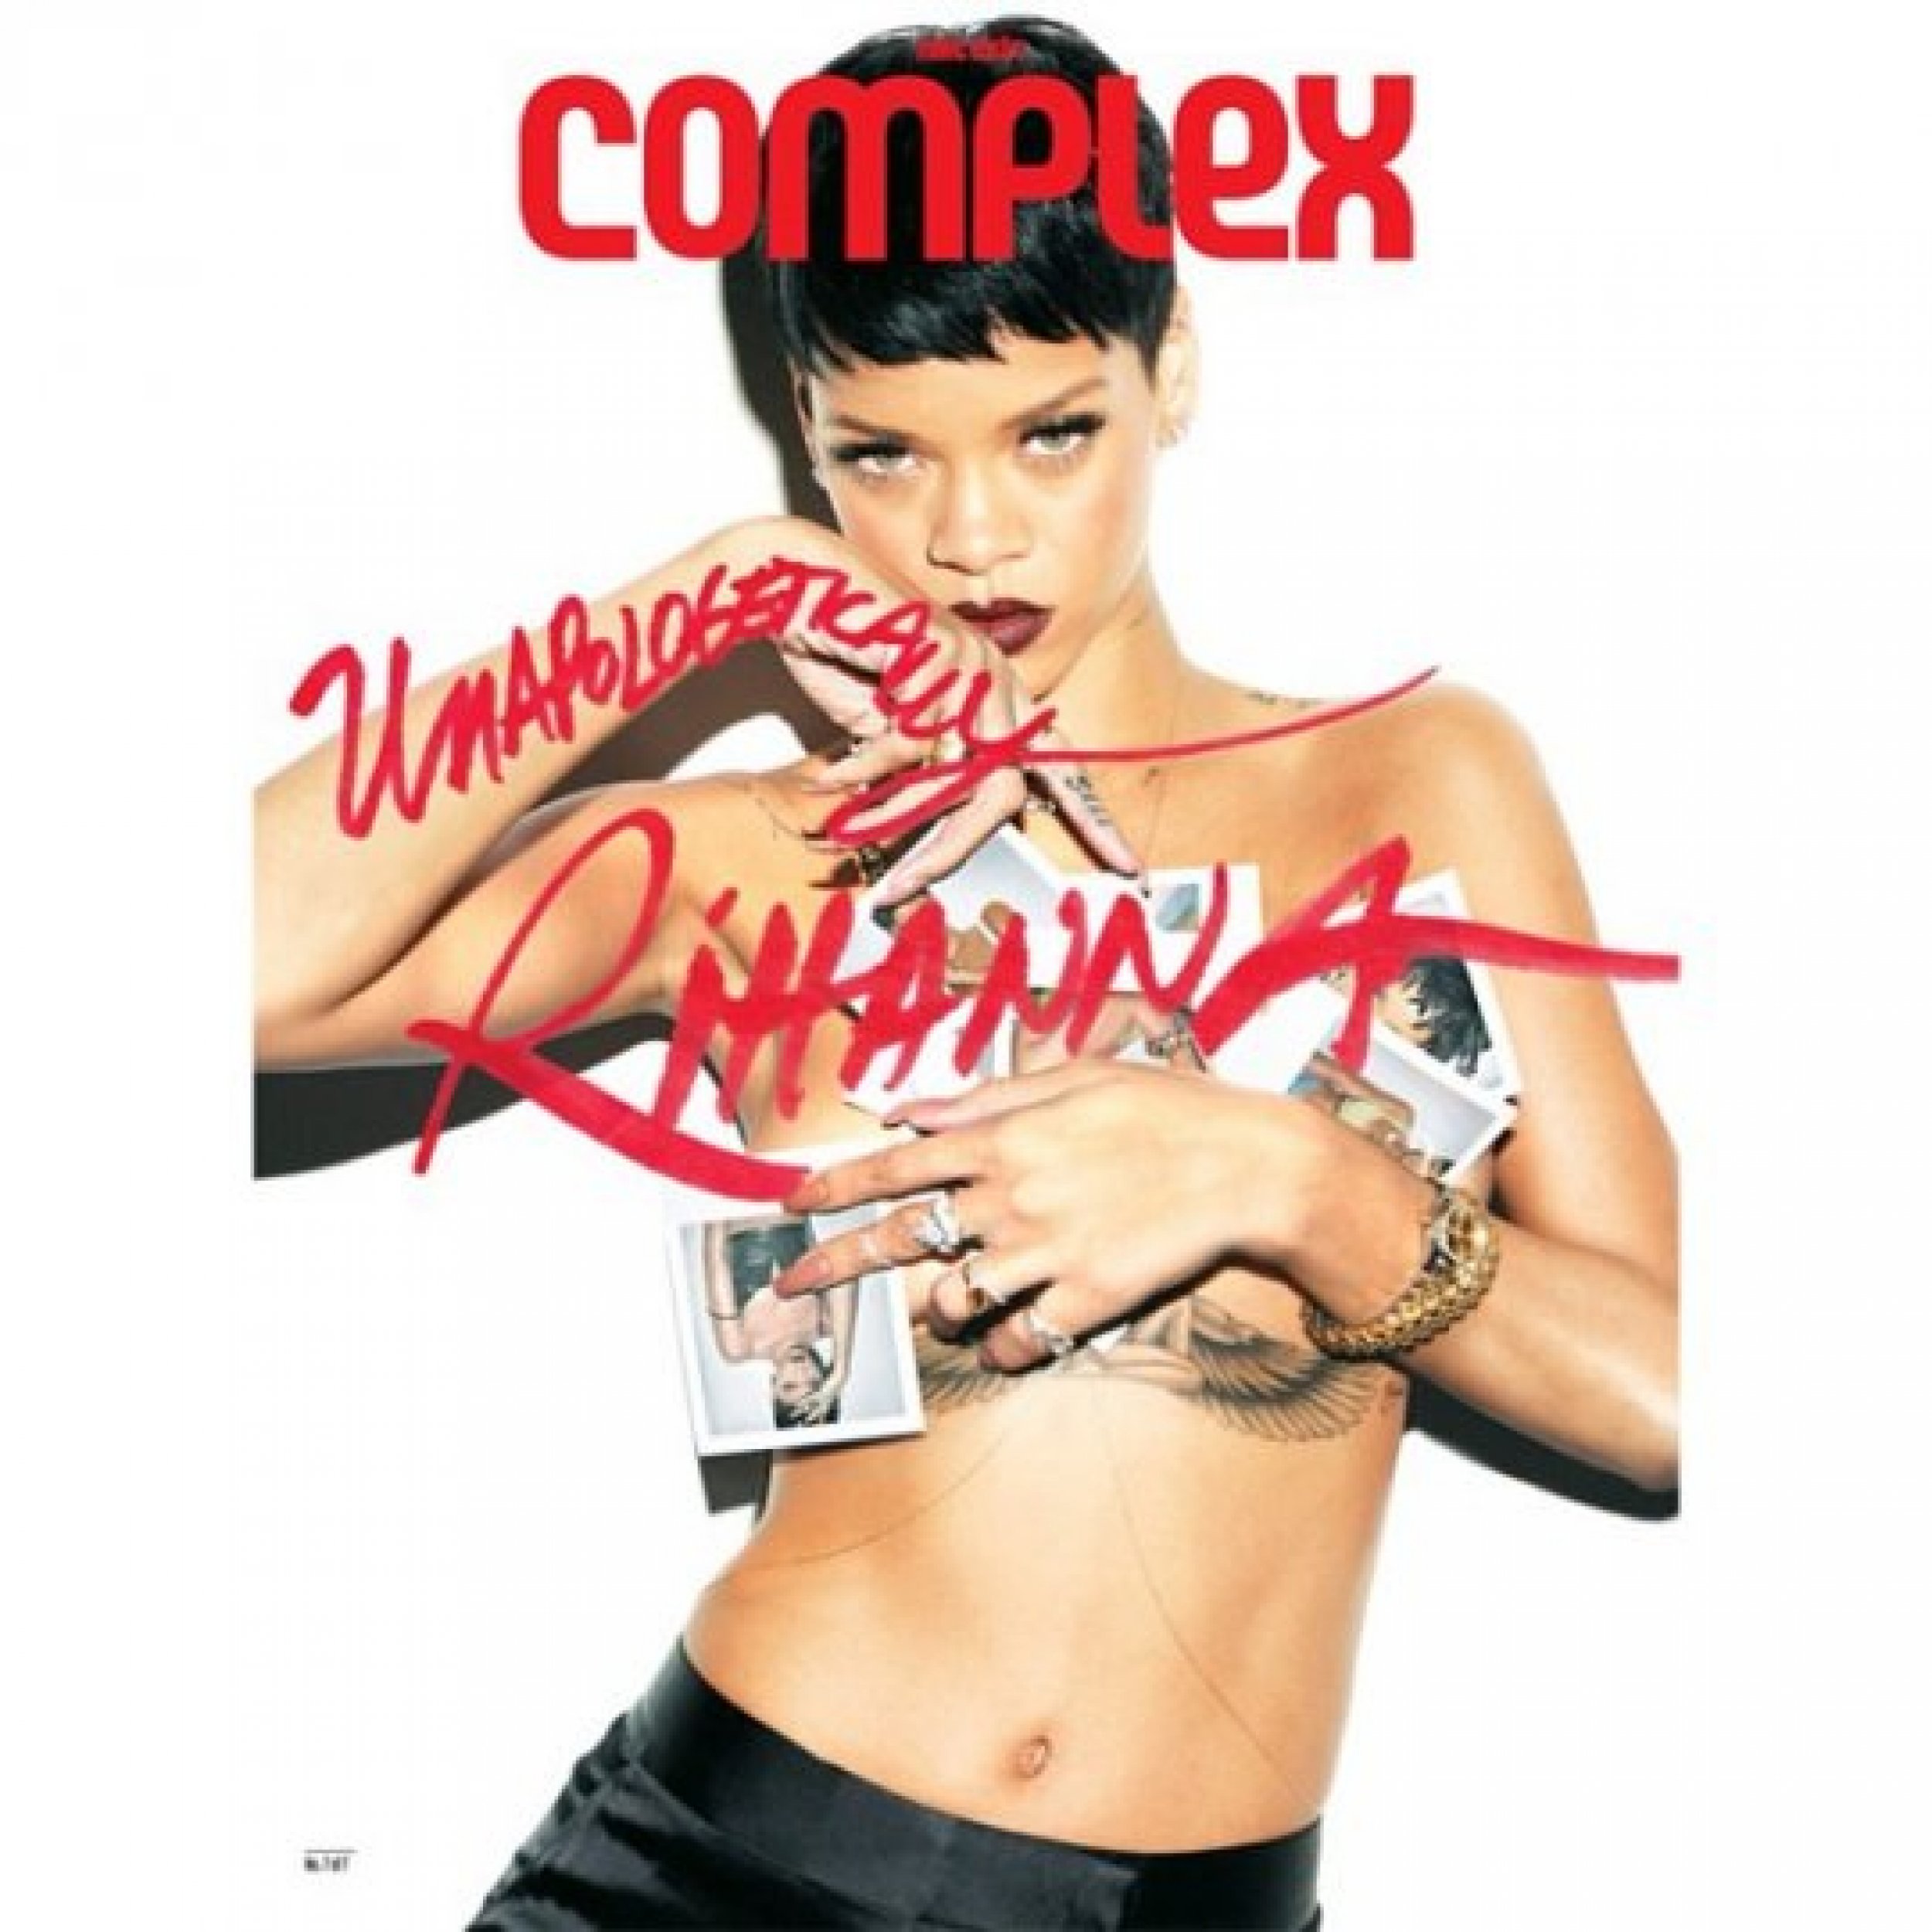 Rihanna Shoots Seven Covers For Complex Magazine